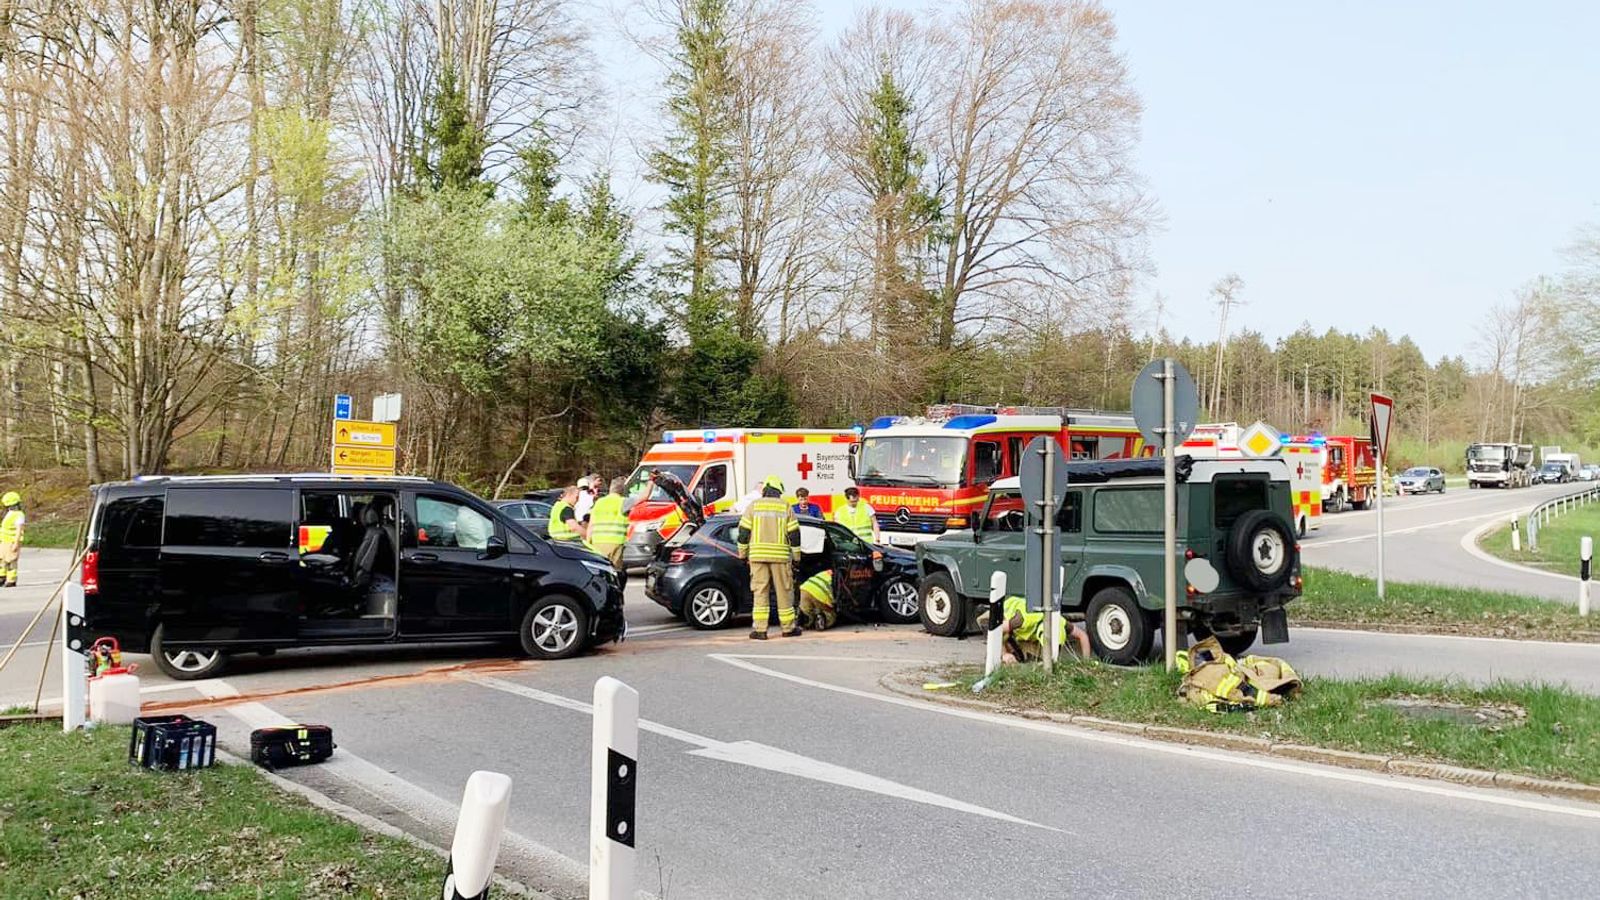 harry kane's children involved in three-car crash in germany